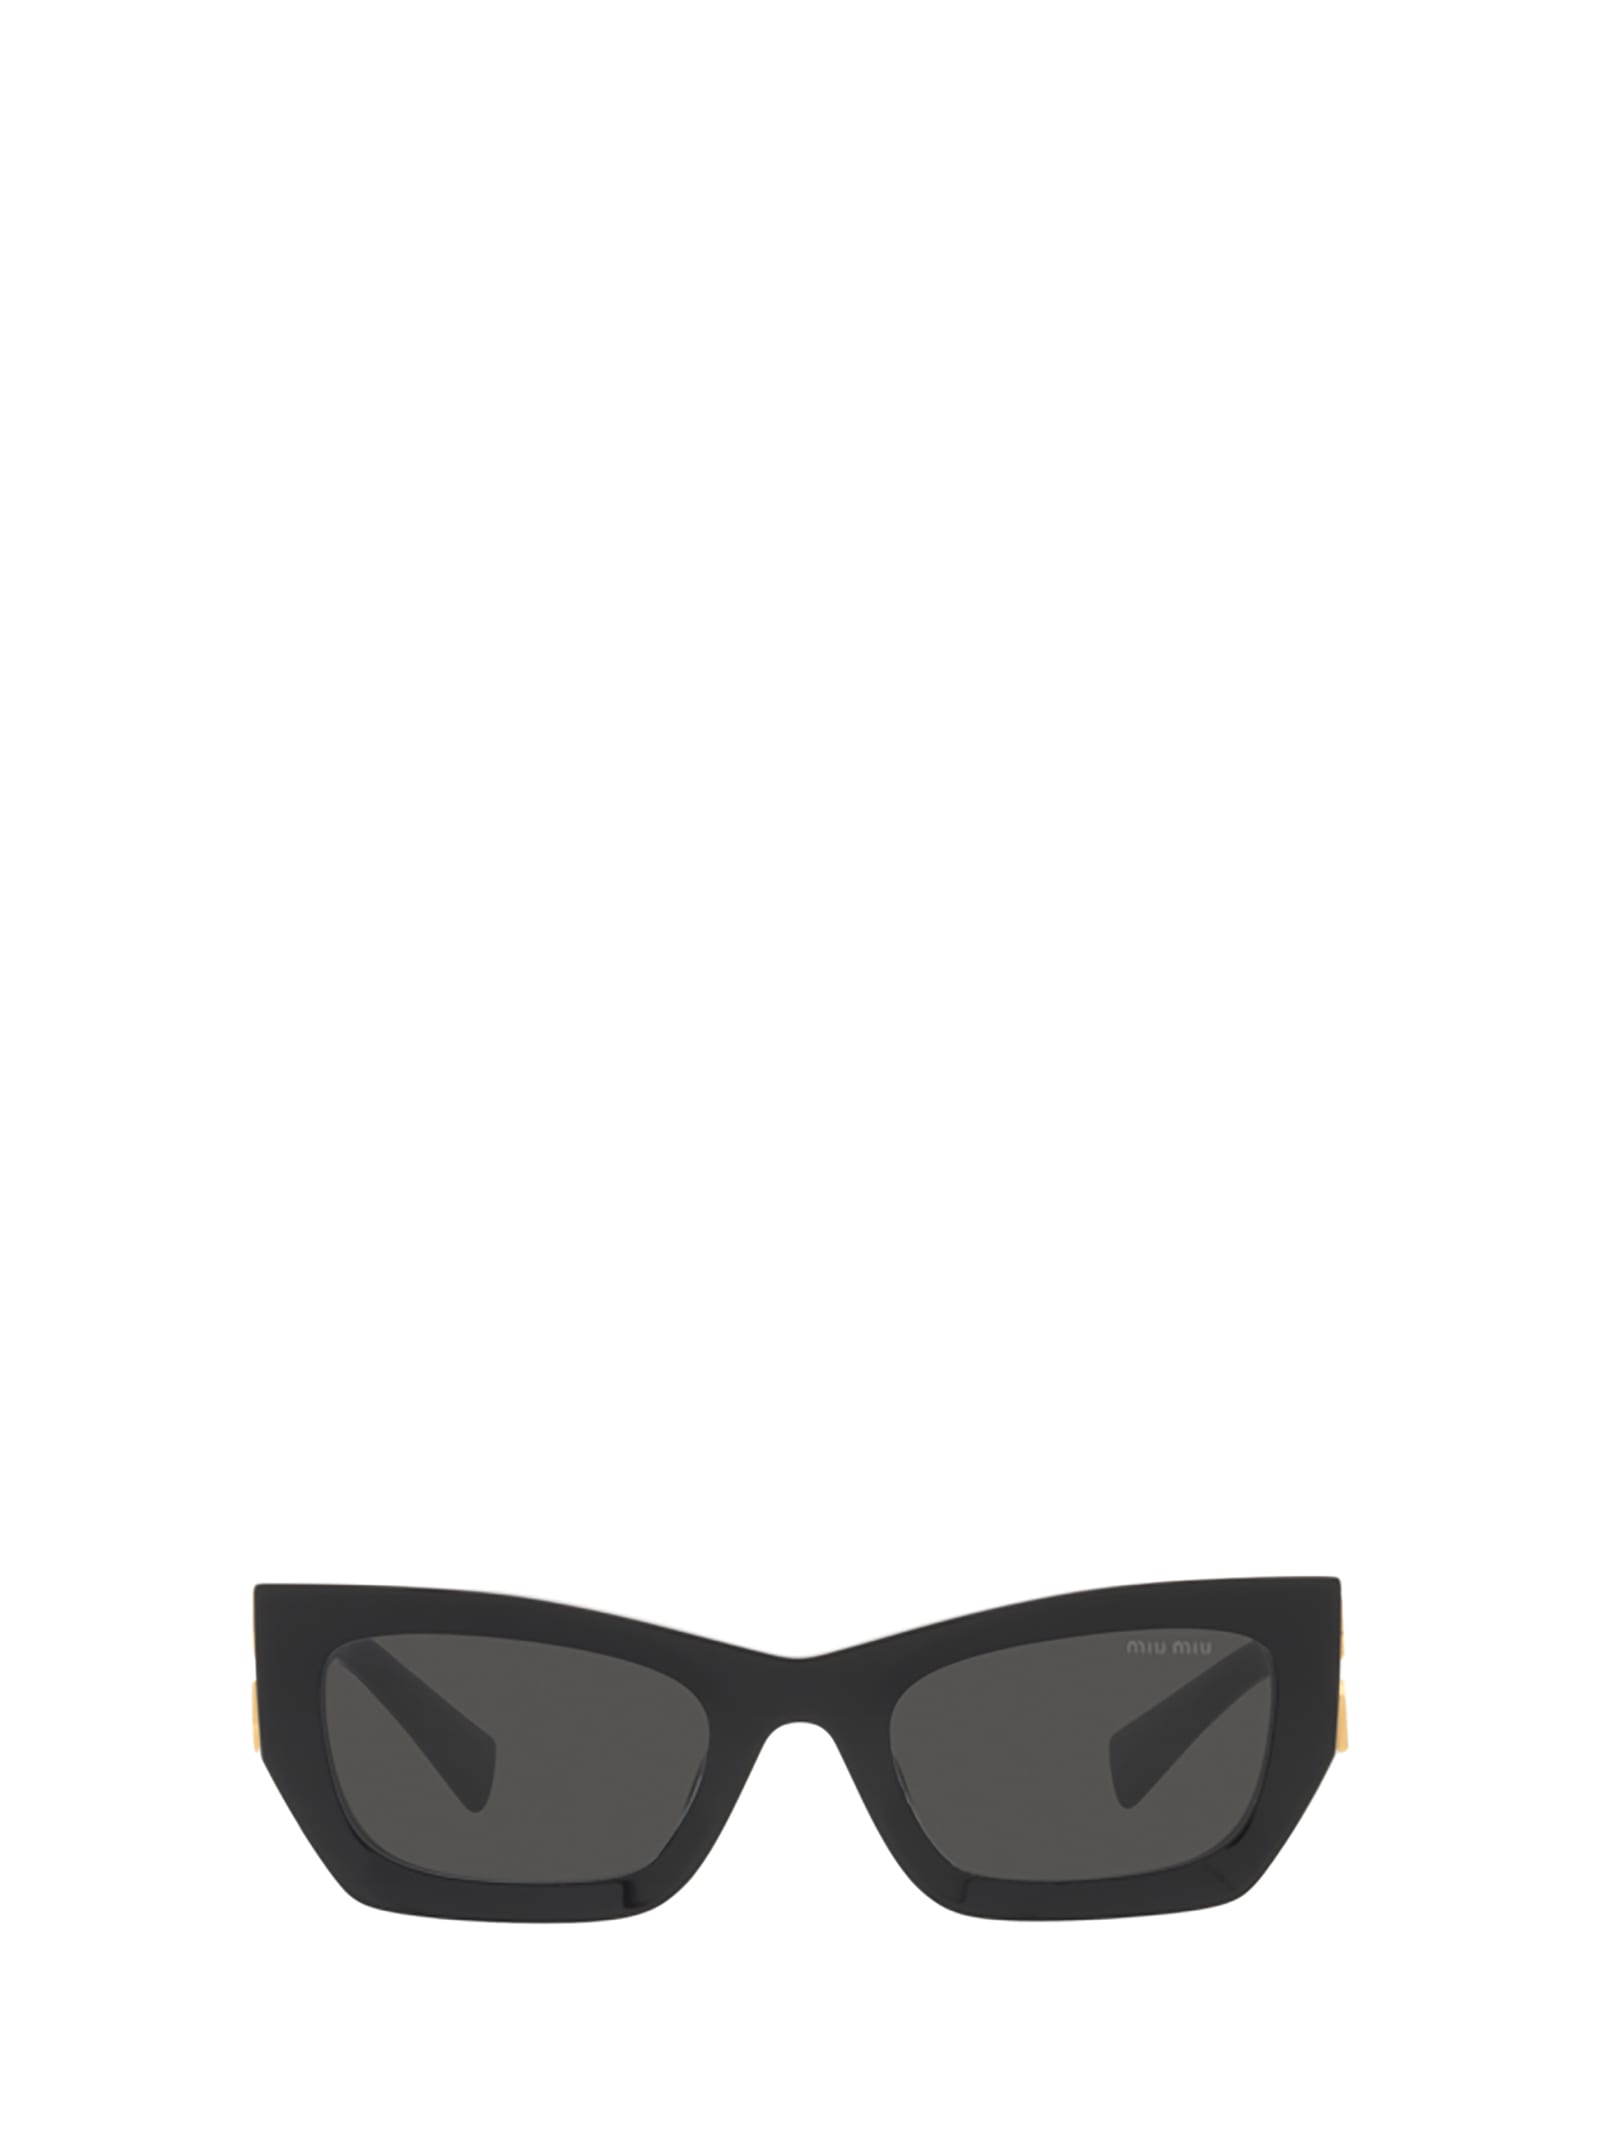 Mu 09ws Black Sunglasses